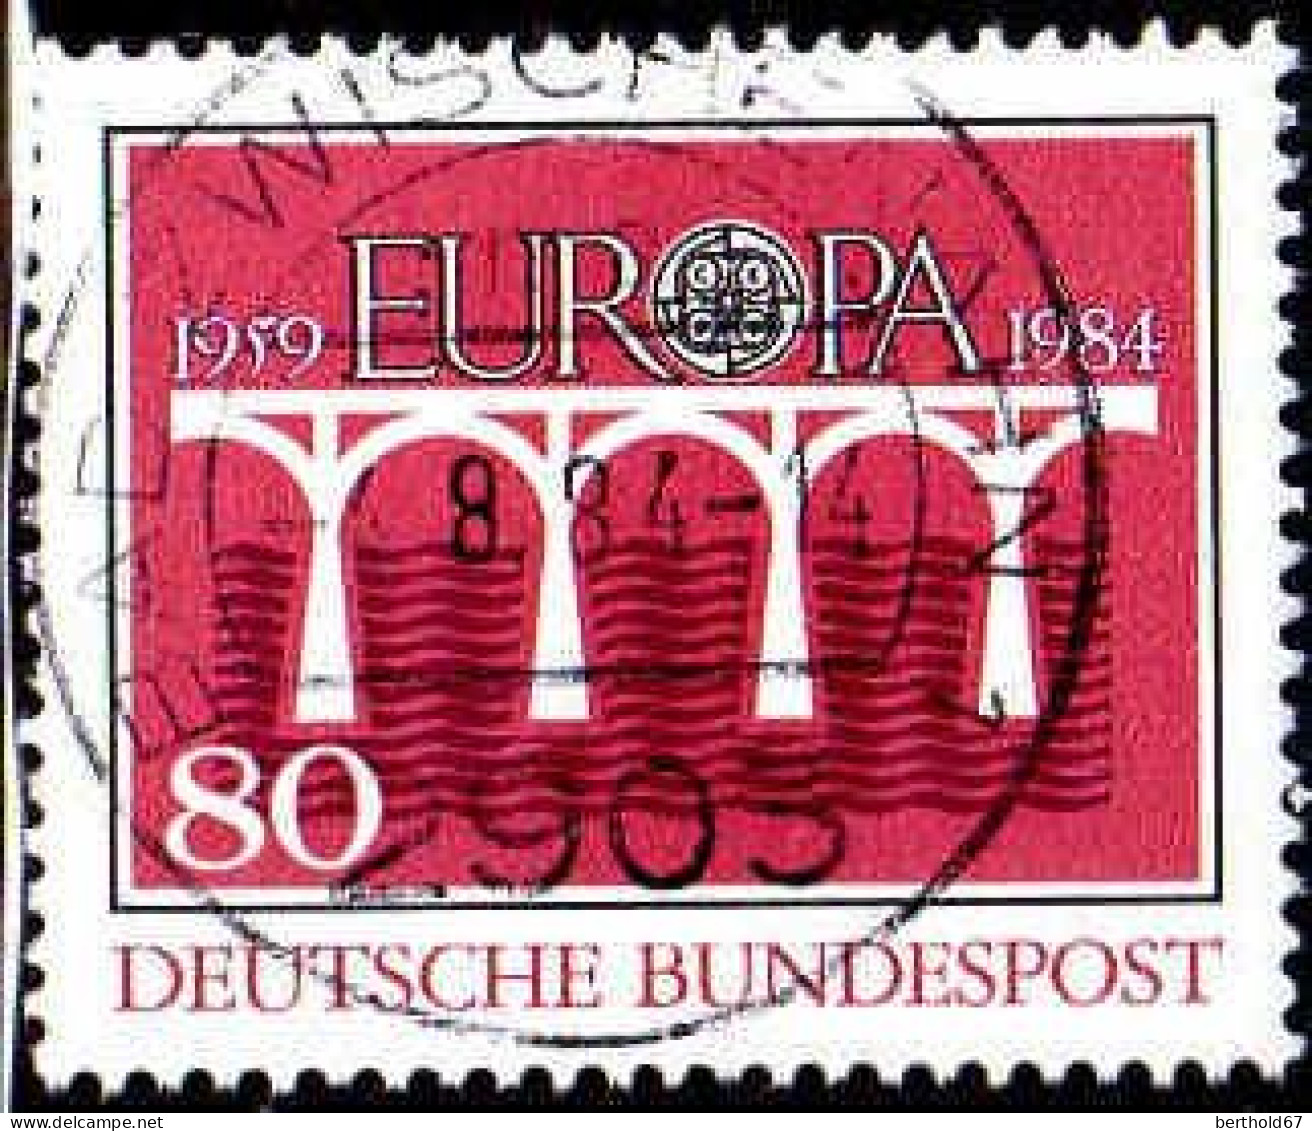 RFA Poste Obl Yv:1043 Mi:1211 Europa Cept Pont De La Coopération (TB Cachet Rond) - Used Stamps